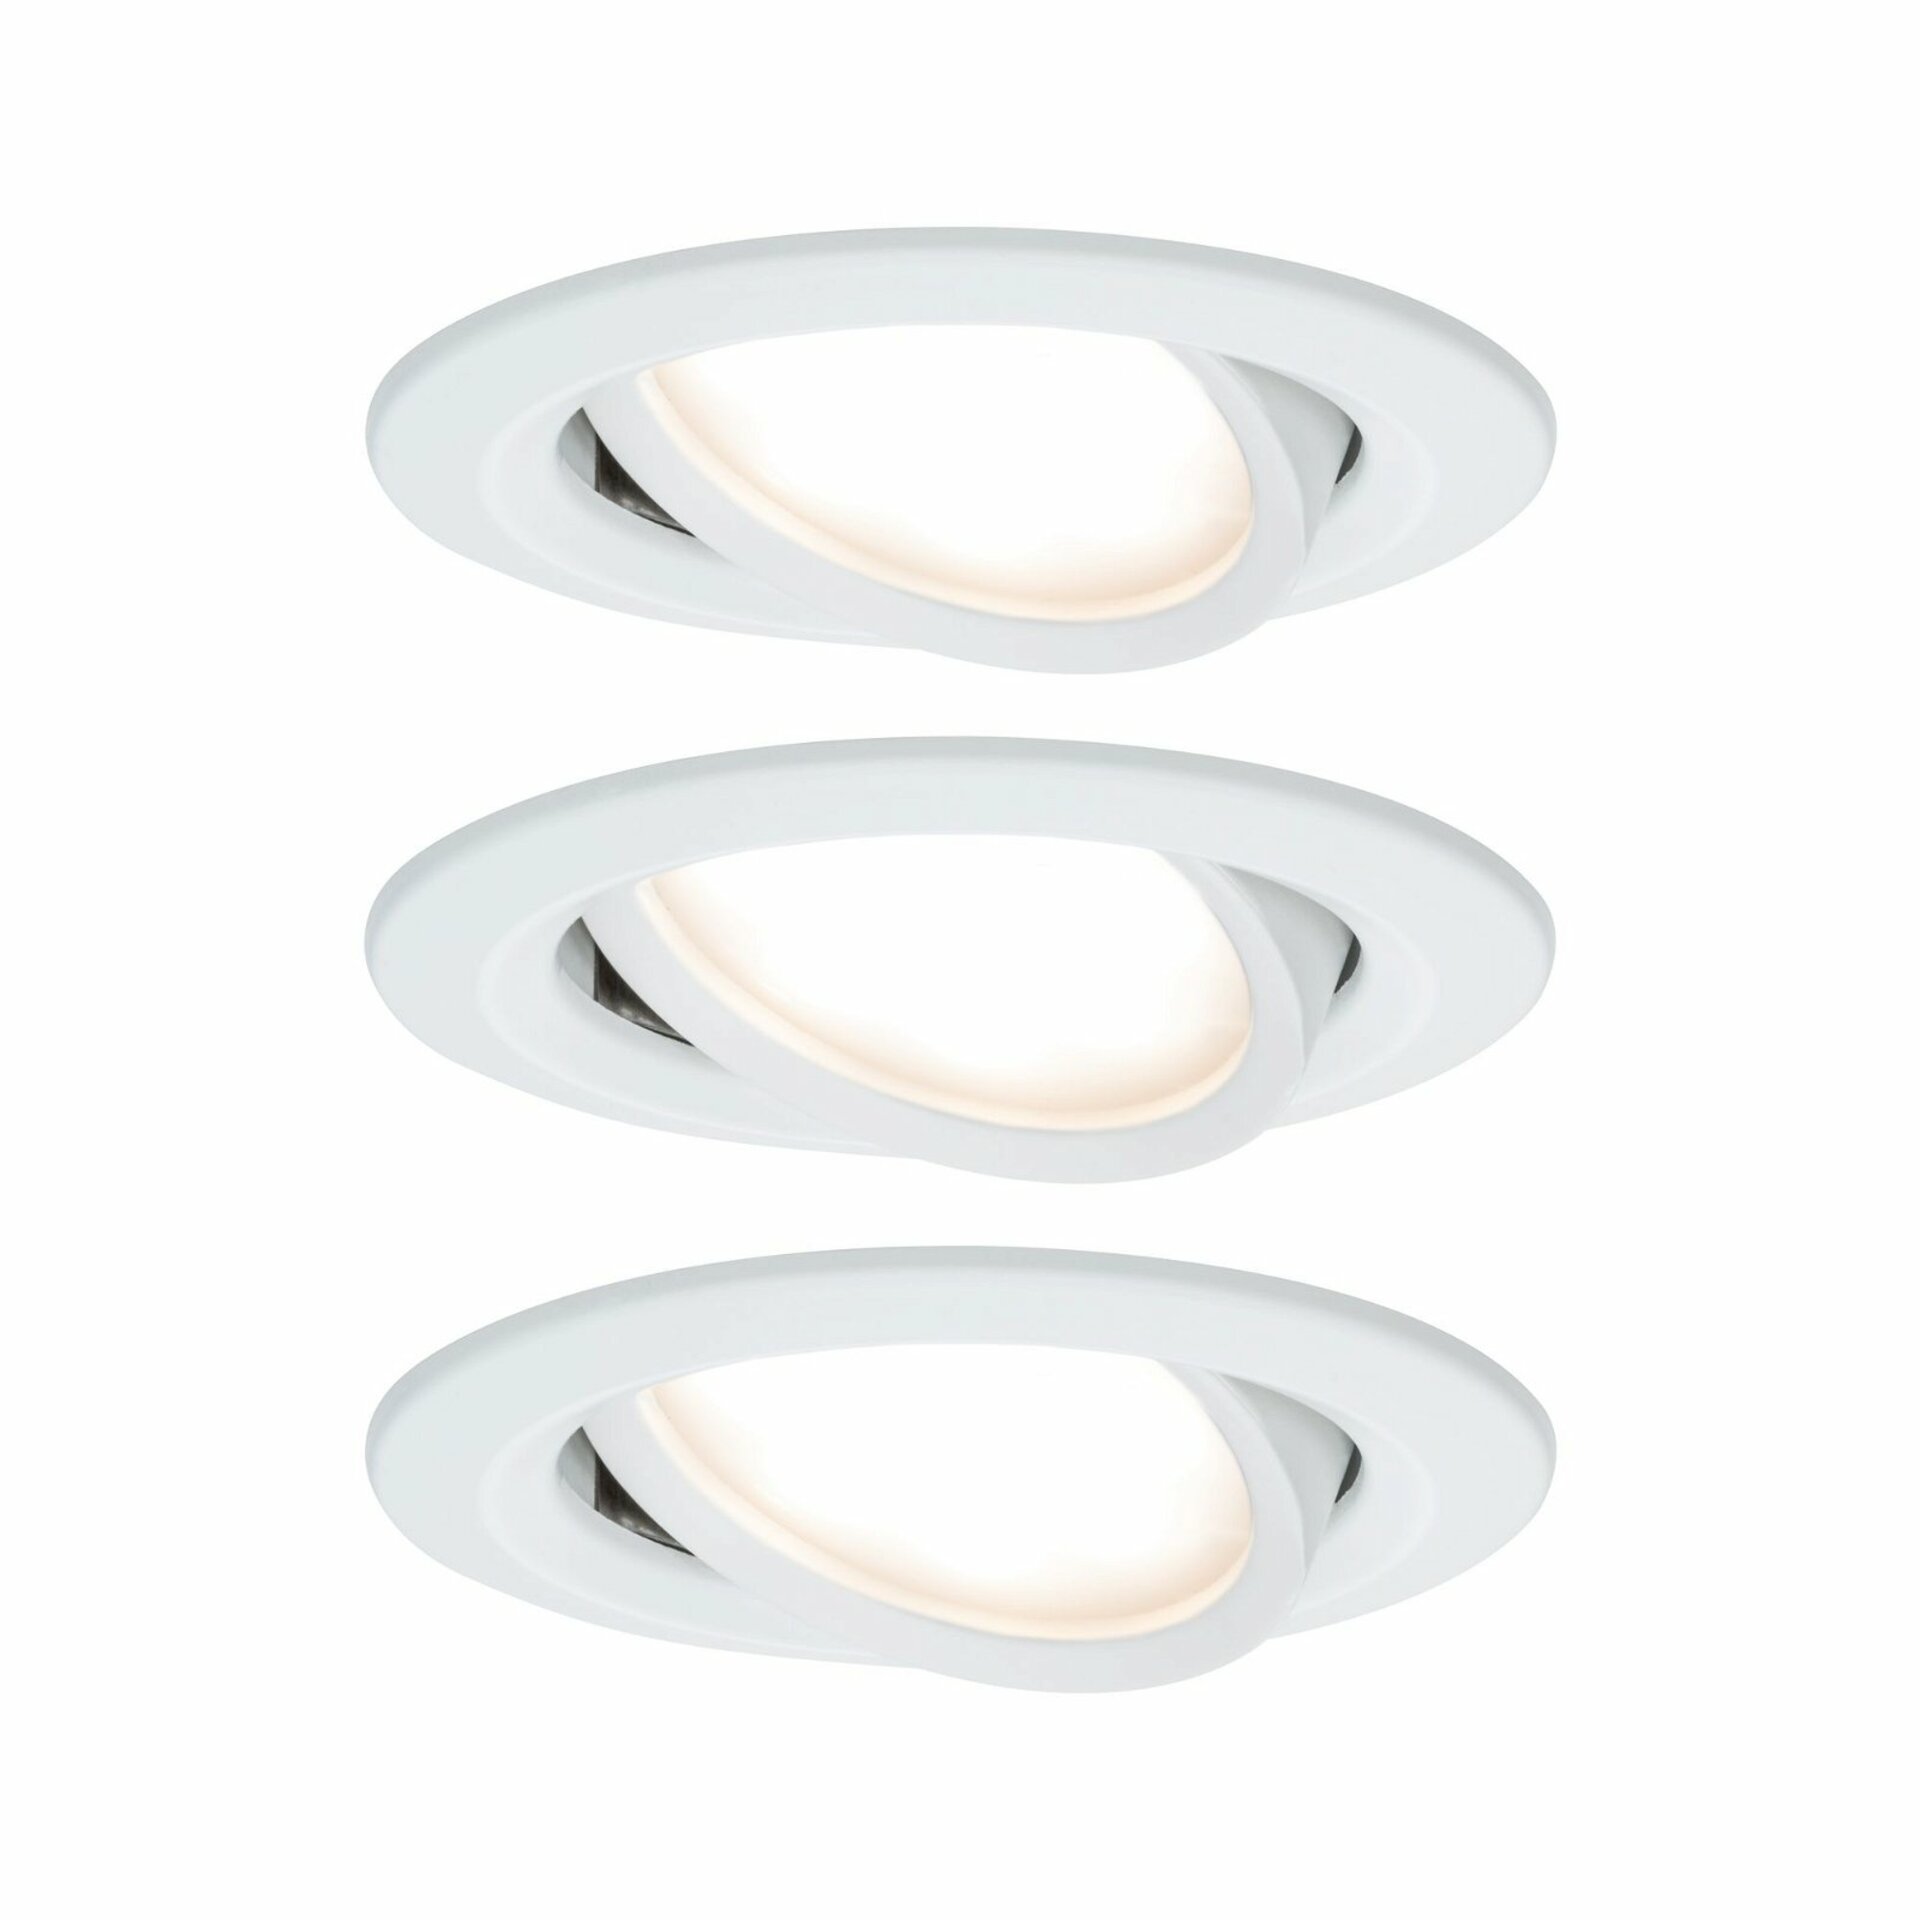 Paulmann vestavné svítidlo LED Coin Slim IP23 kruhové 6,8W bílá 3ks sada stmívatelné a nastavitelné 938.75 P 93875